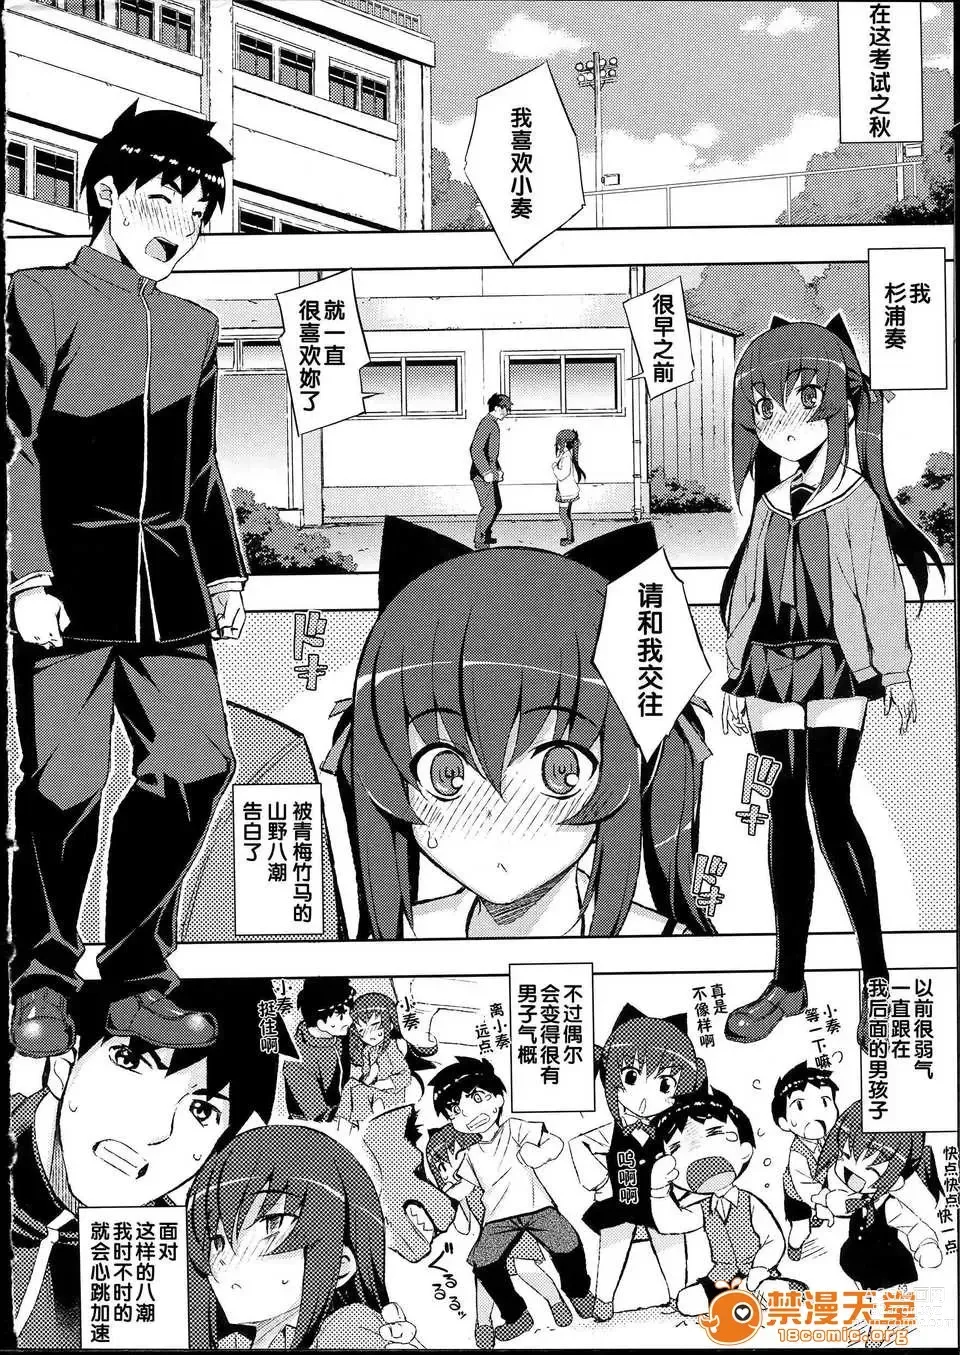 Page 10 of manga NTR2